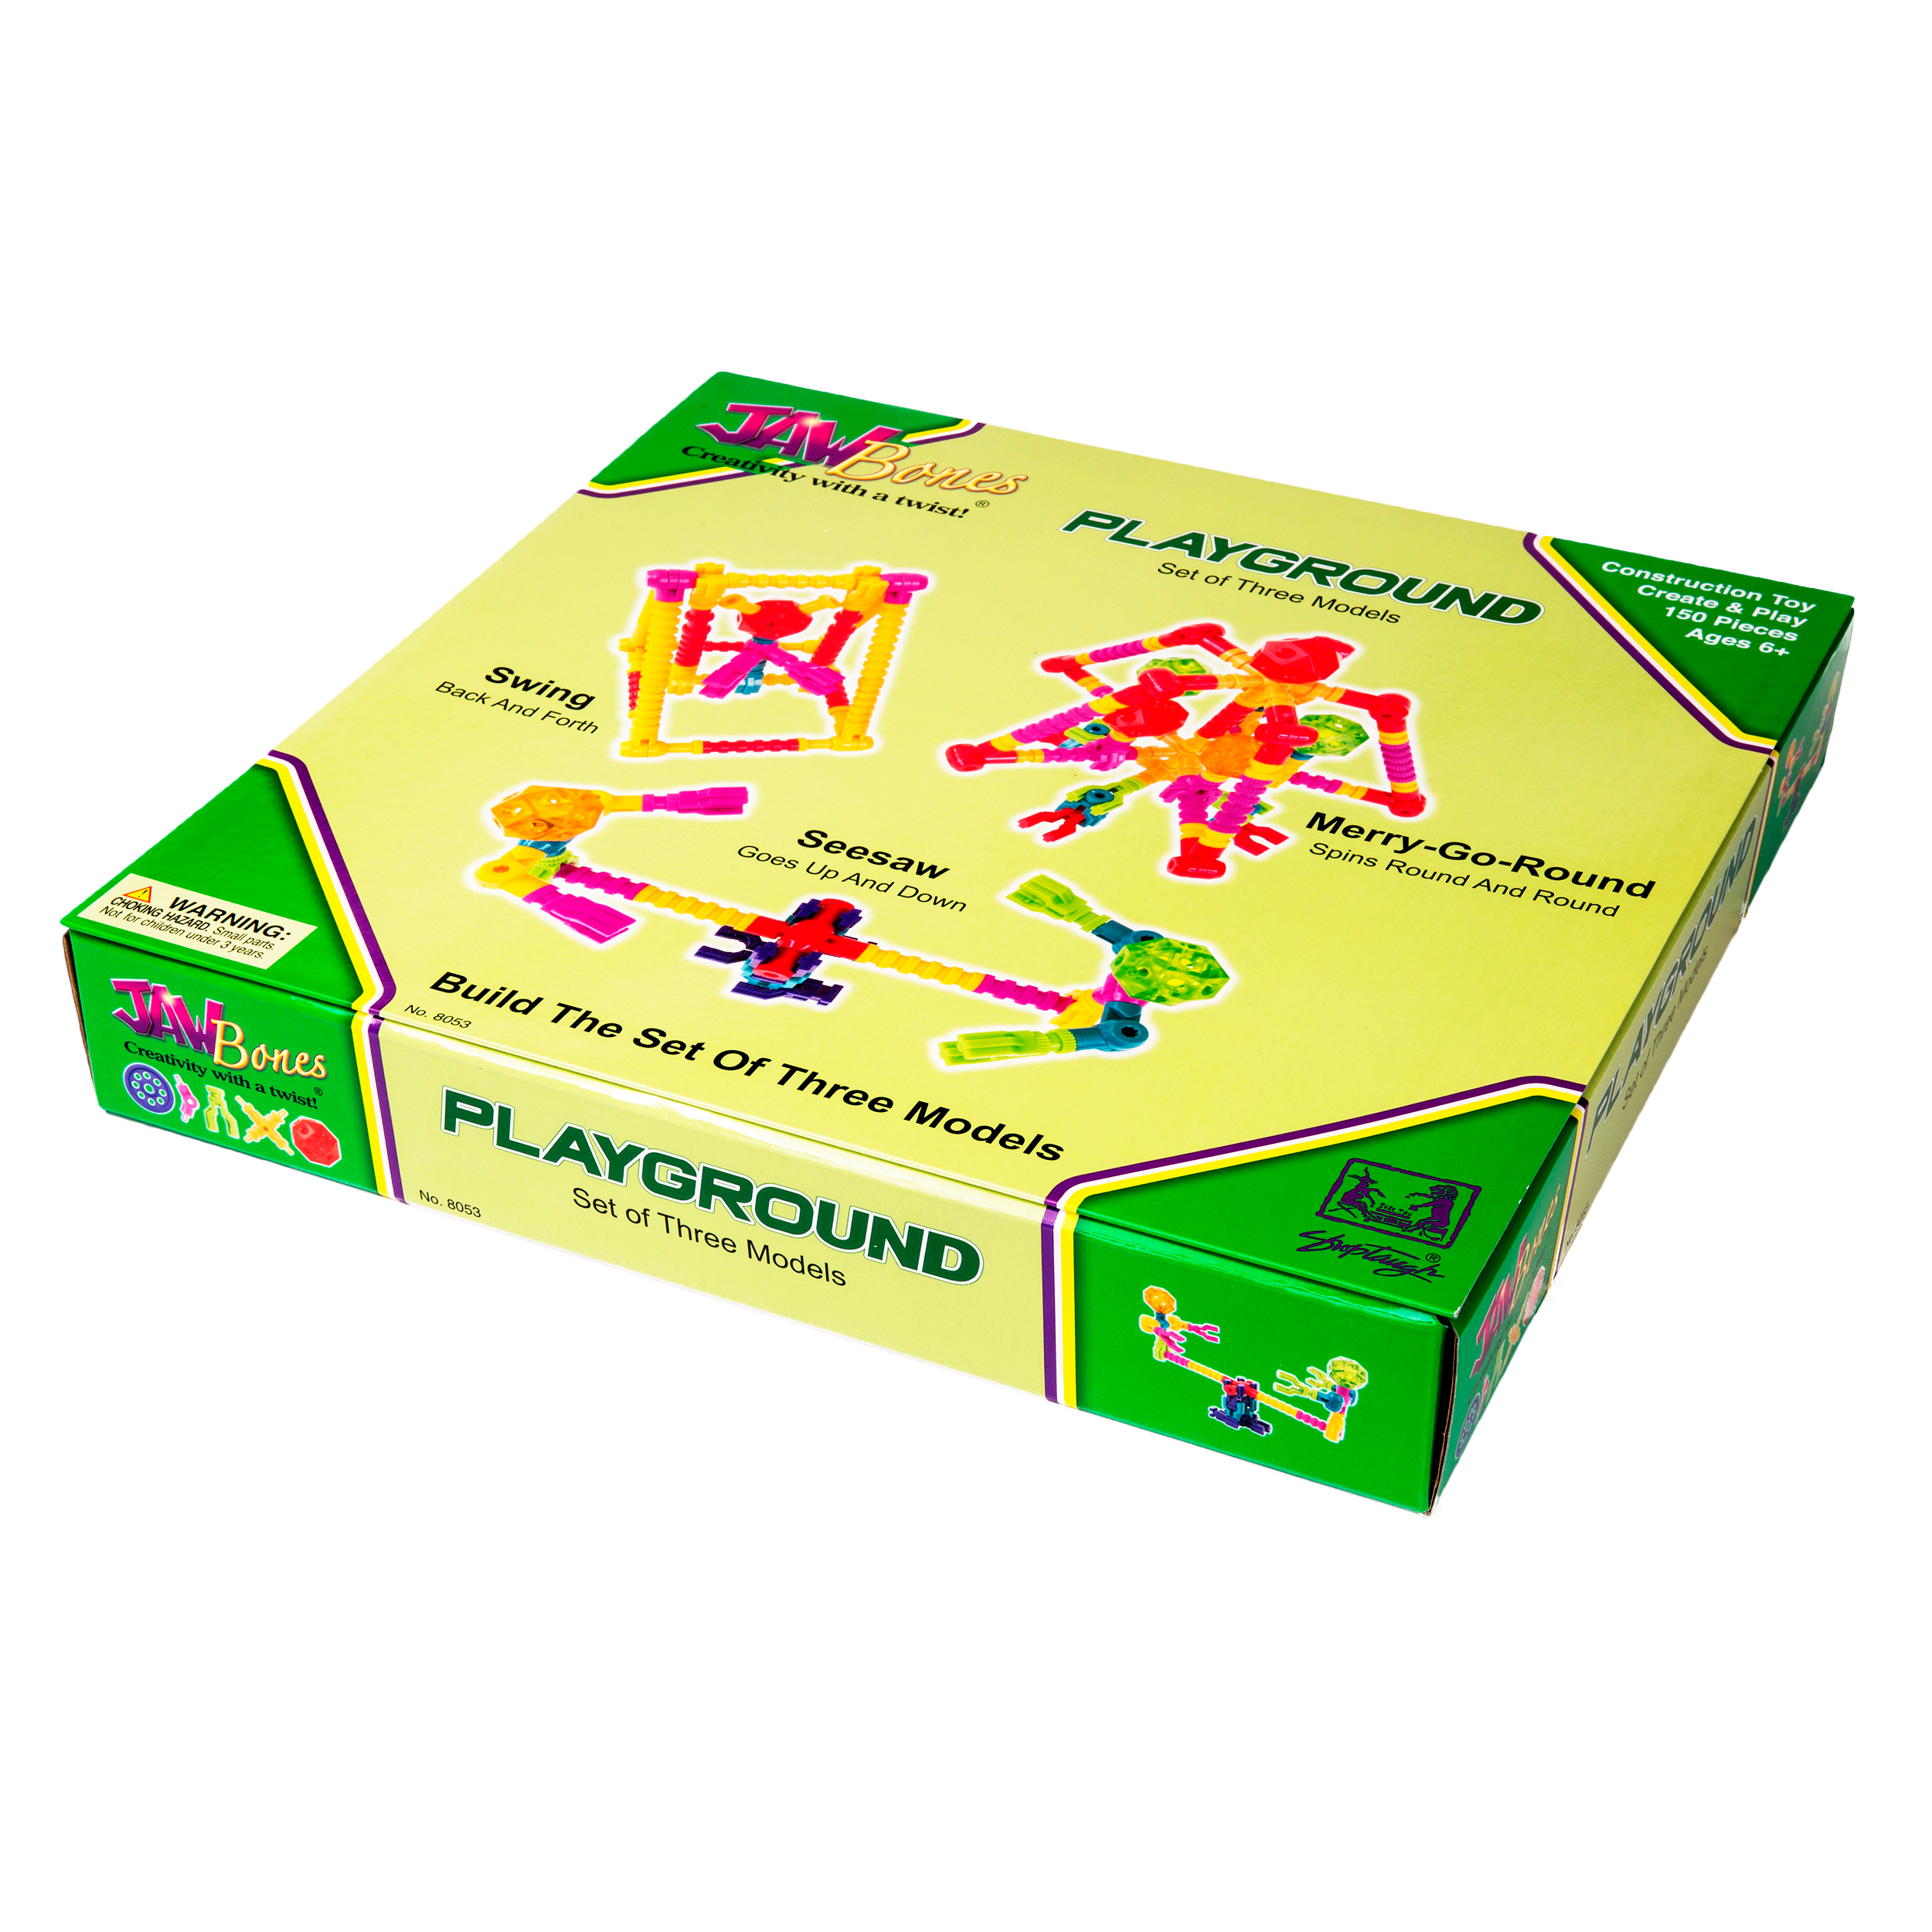 Be Good Co Jawbones Playground Boxed Set: 150 Pcs